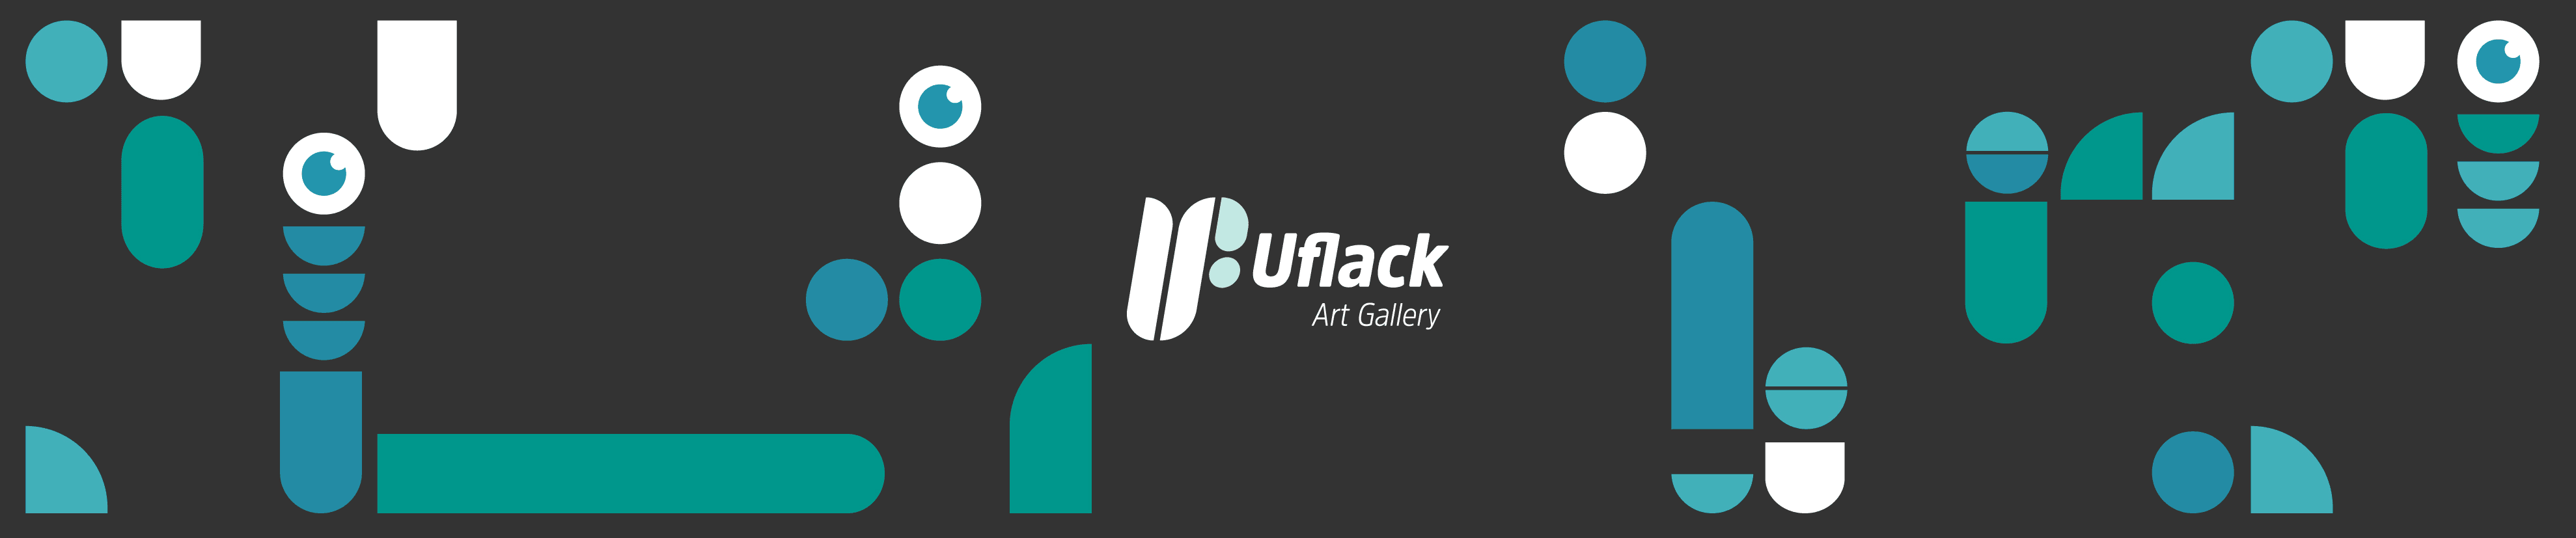 Uflack_Art_Gallery bannière